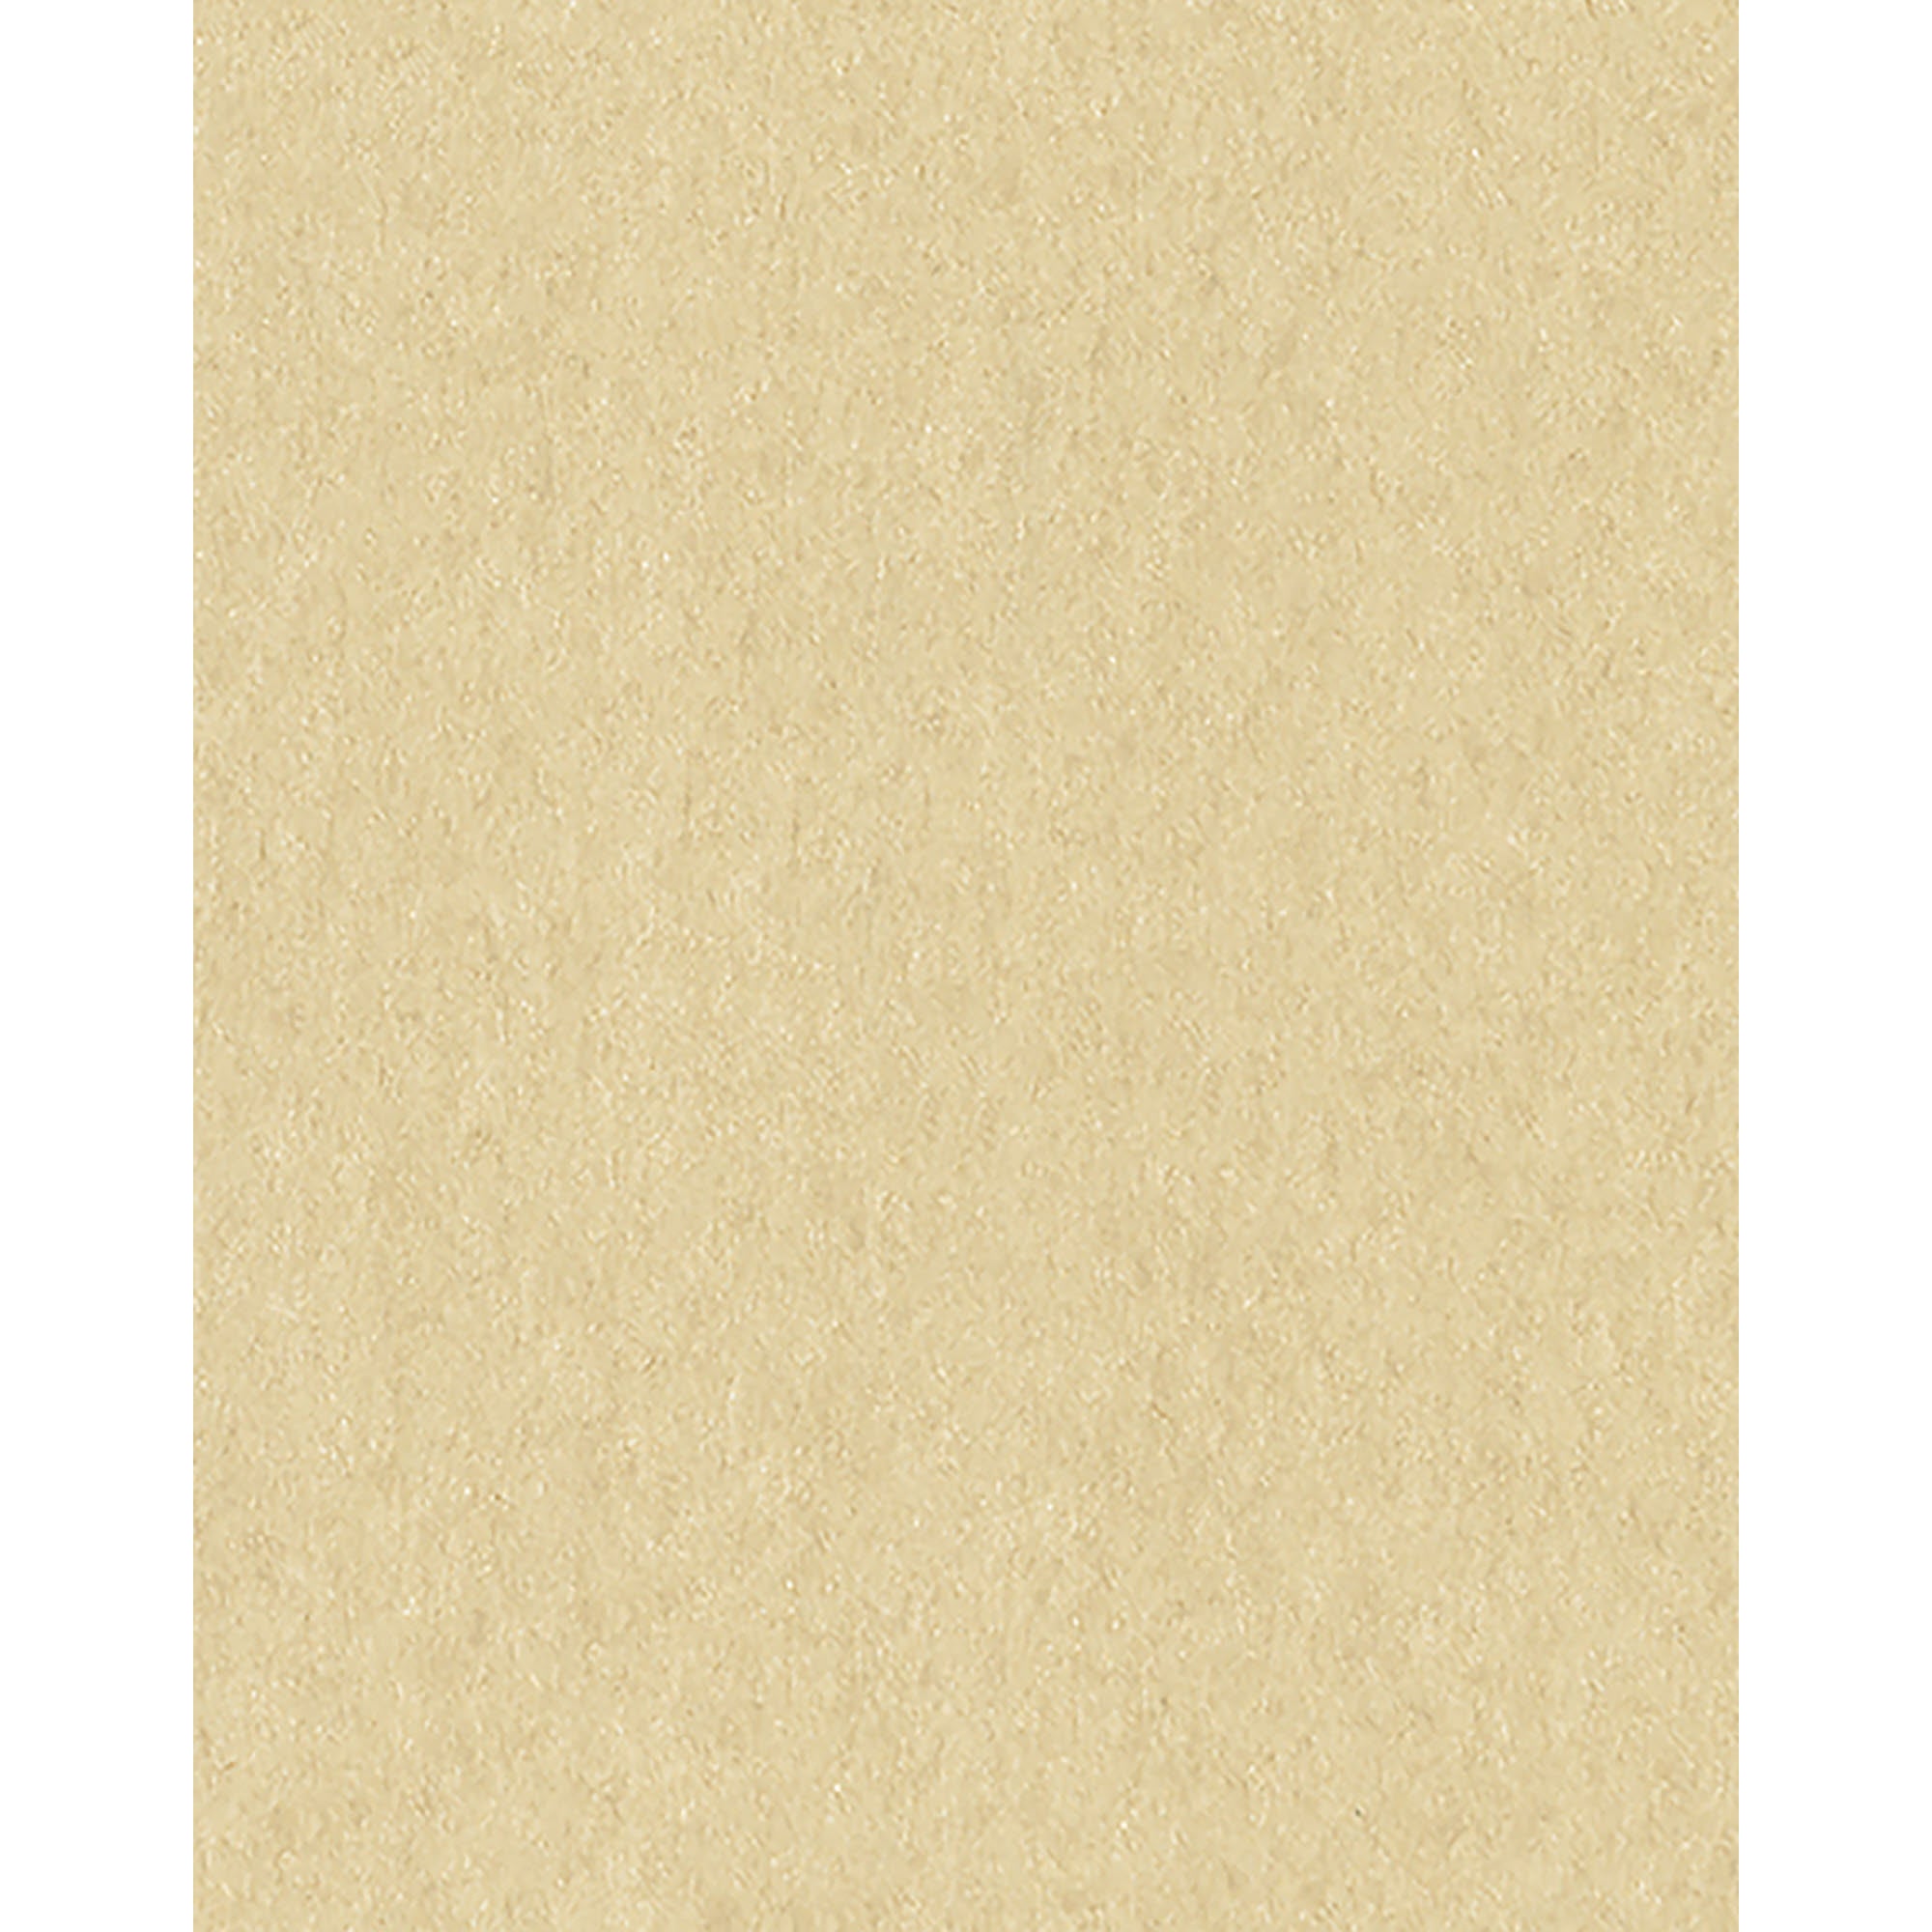 Buy sun-gold-sparkle Design Design Sparkle Tissue Paper